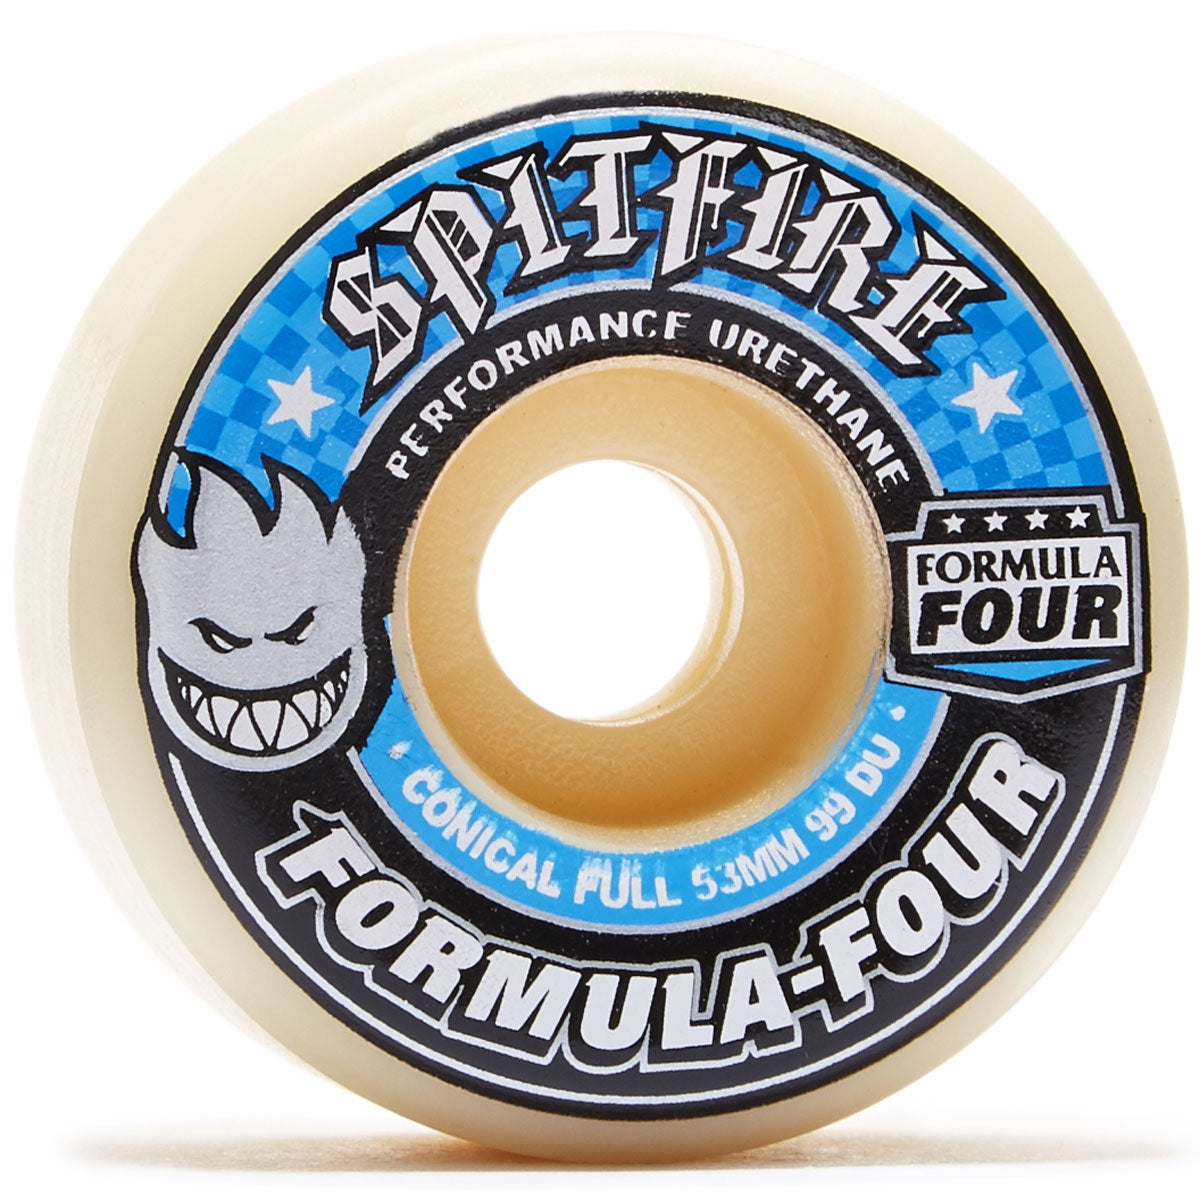 Spitfire F4 99d Conical Full Skateboard Wheels - 53mm image 1